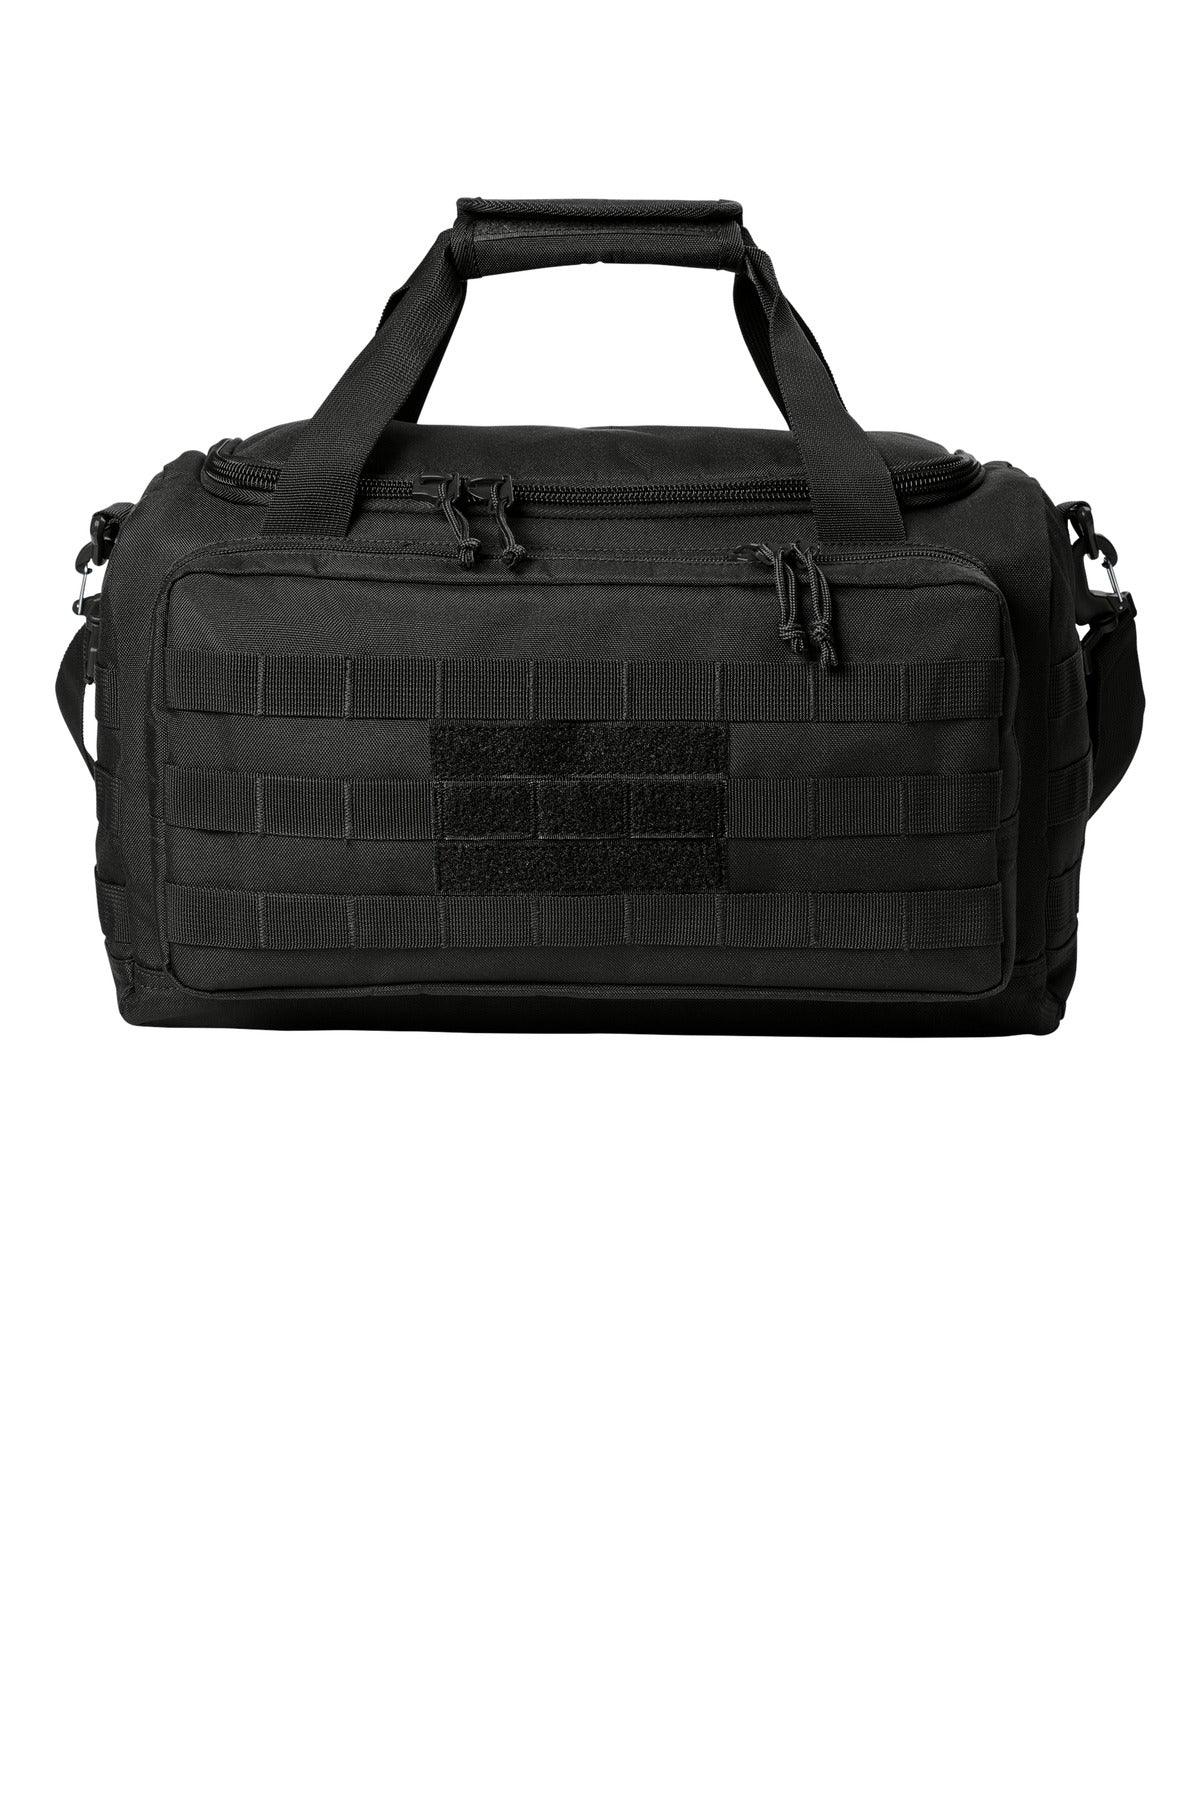 CornerStone Tactical Gear Bag CSB816 - Dresses Max